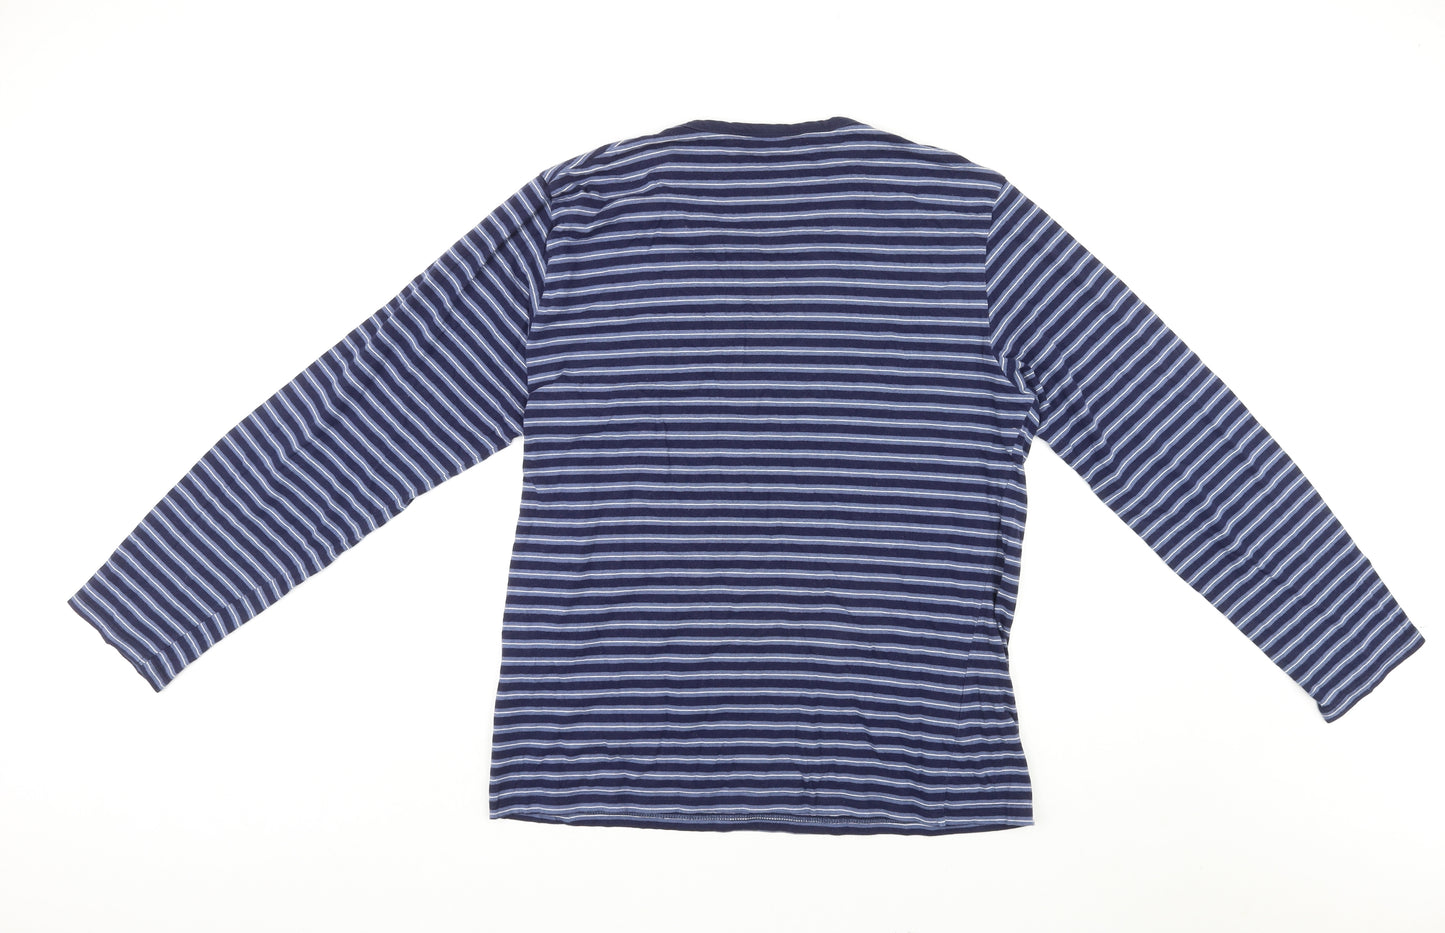 Tom Franks Mens Blue Striped Cotton T-Shirt Size XL Round Neck